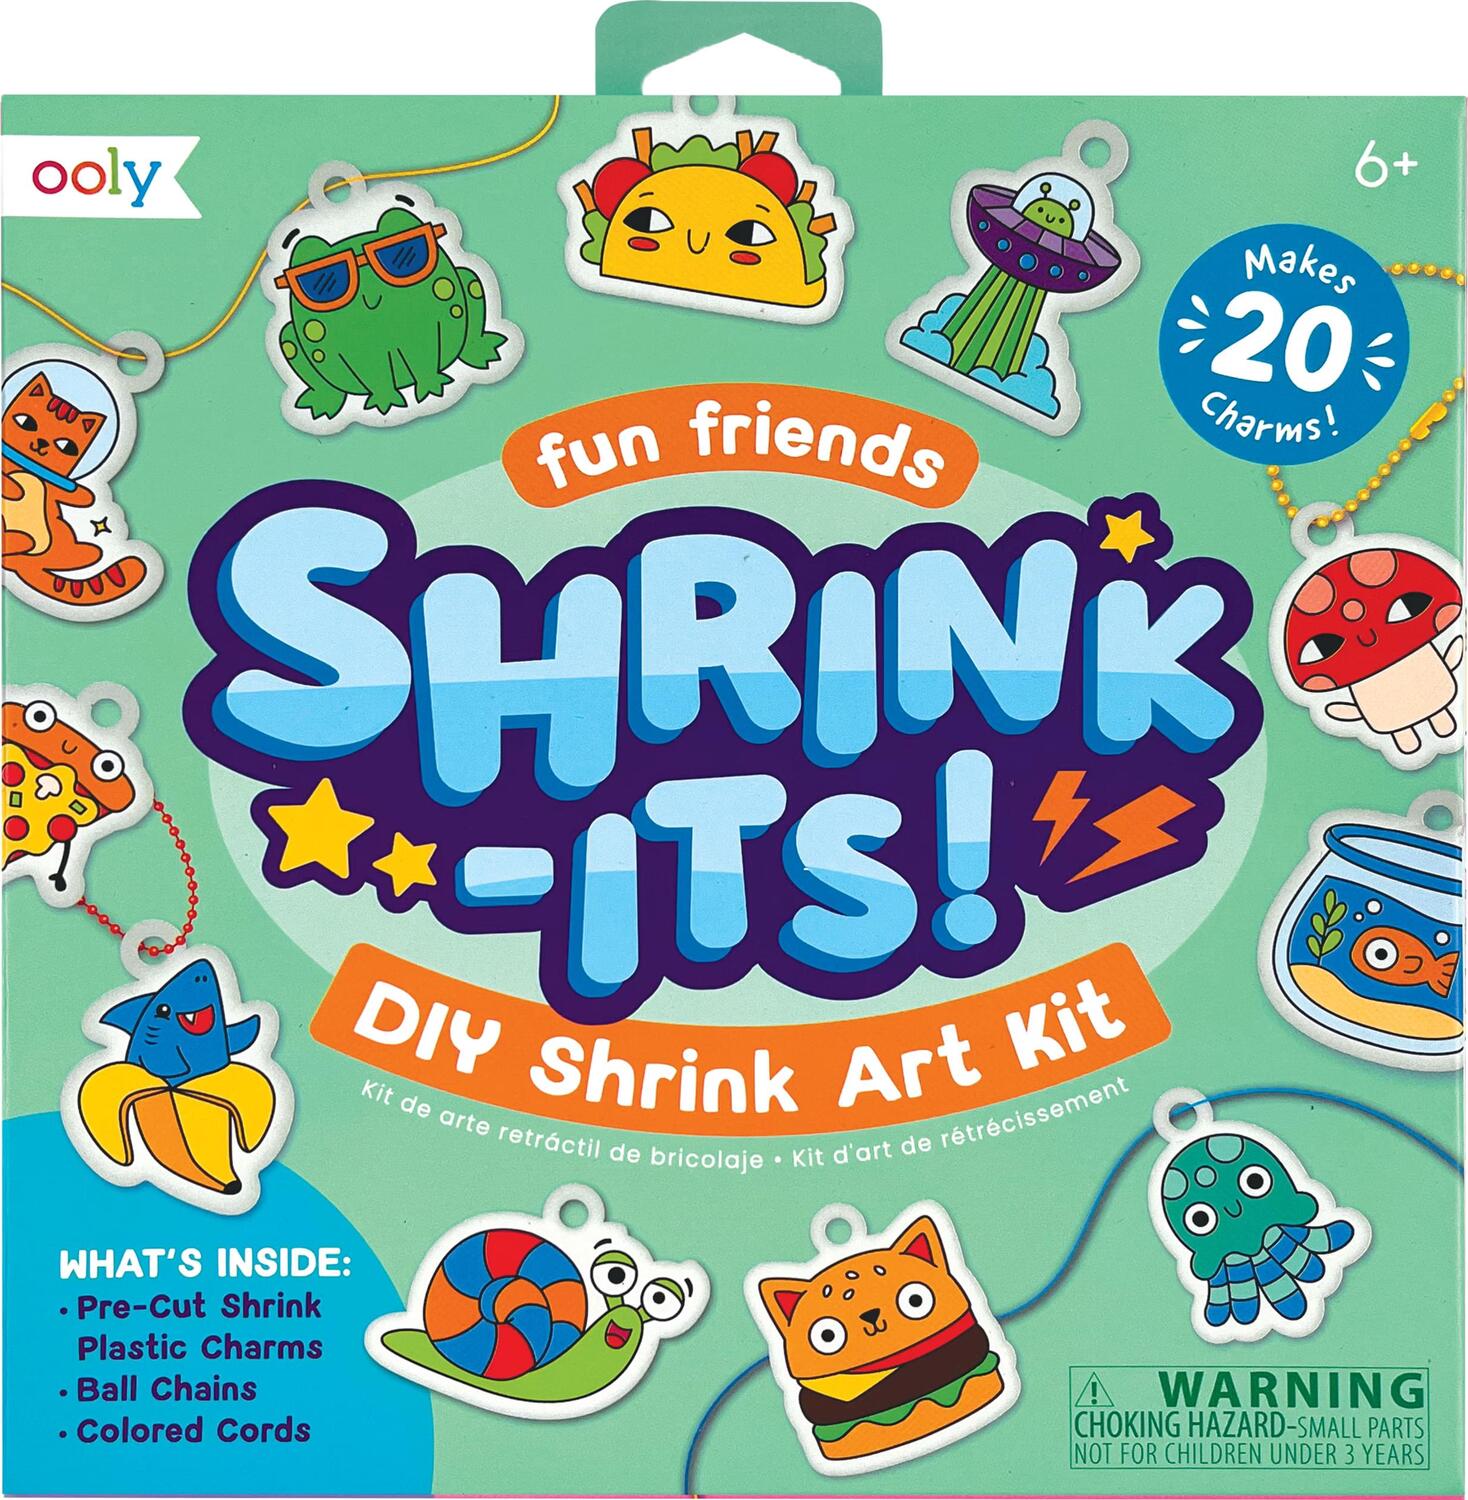 Shrink Its! DIY Shrink Art Kit Fun Friends